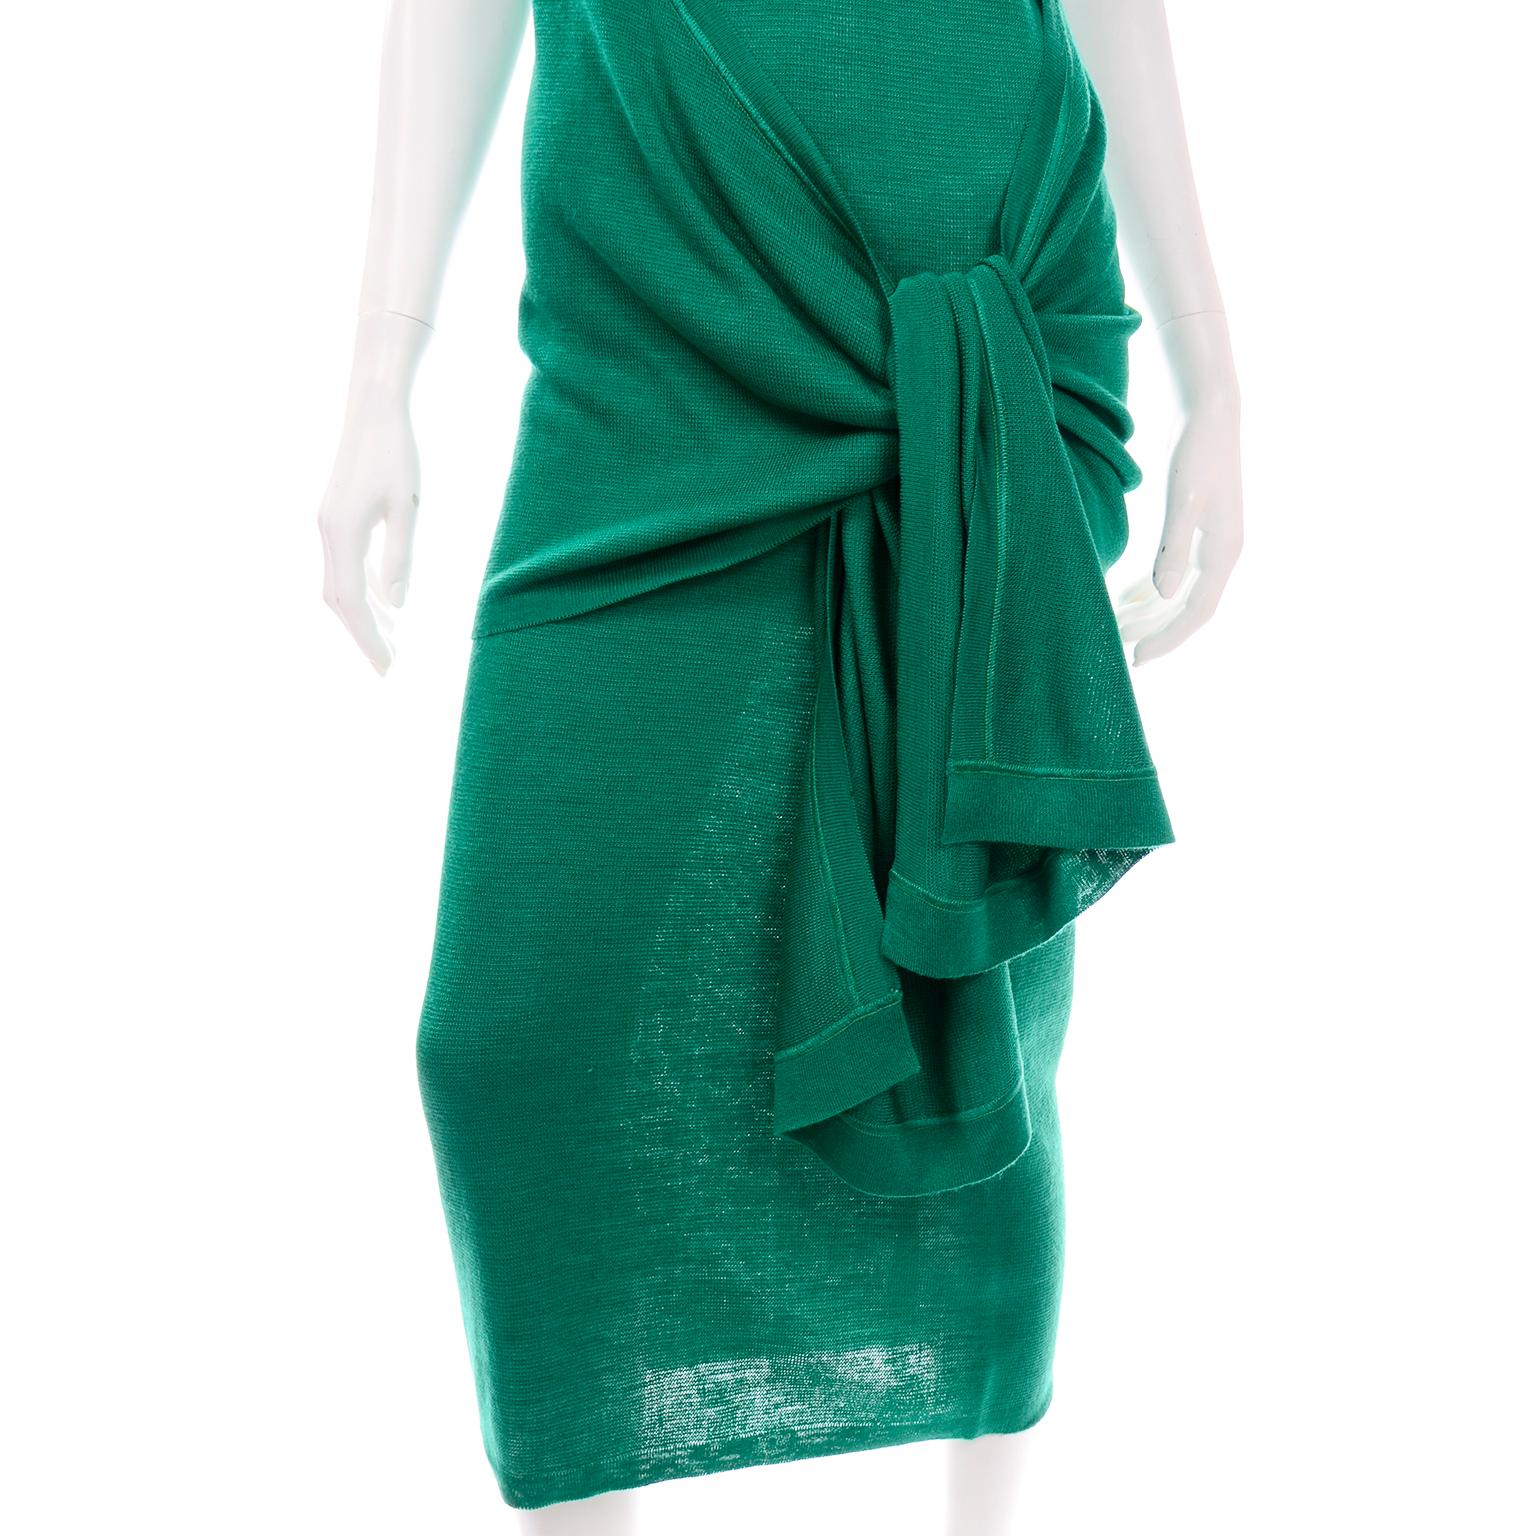 Angelo Tarlazzi Paris Vintage Emerald Green Stretch Knit Dress W Drape Wrap For Sale 5